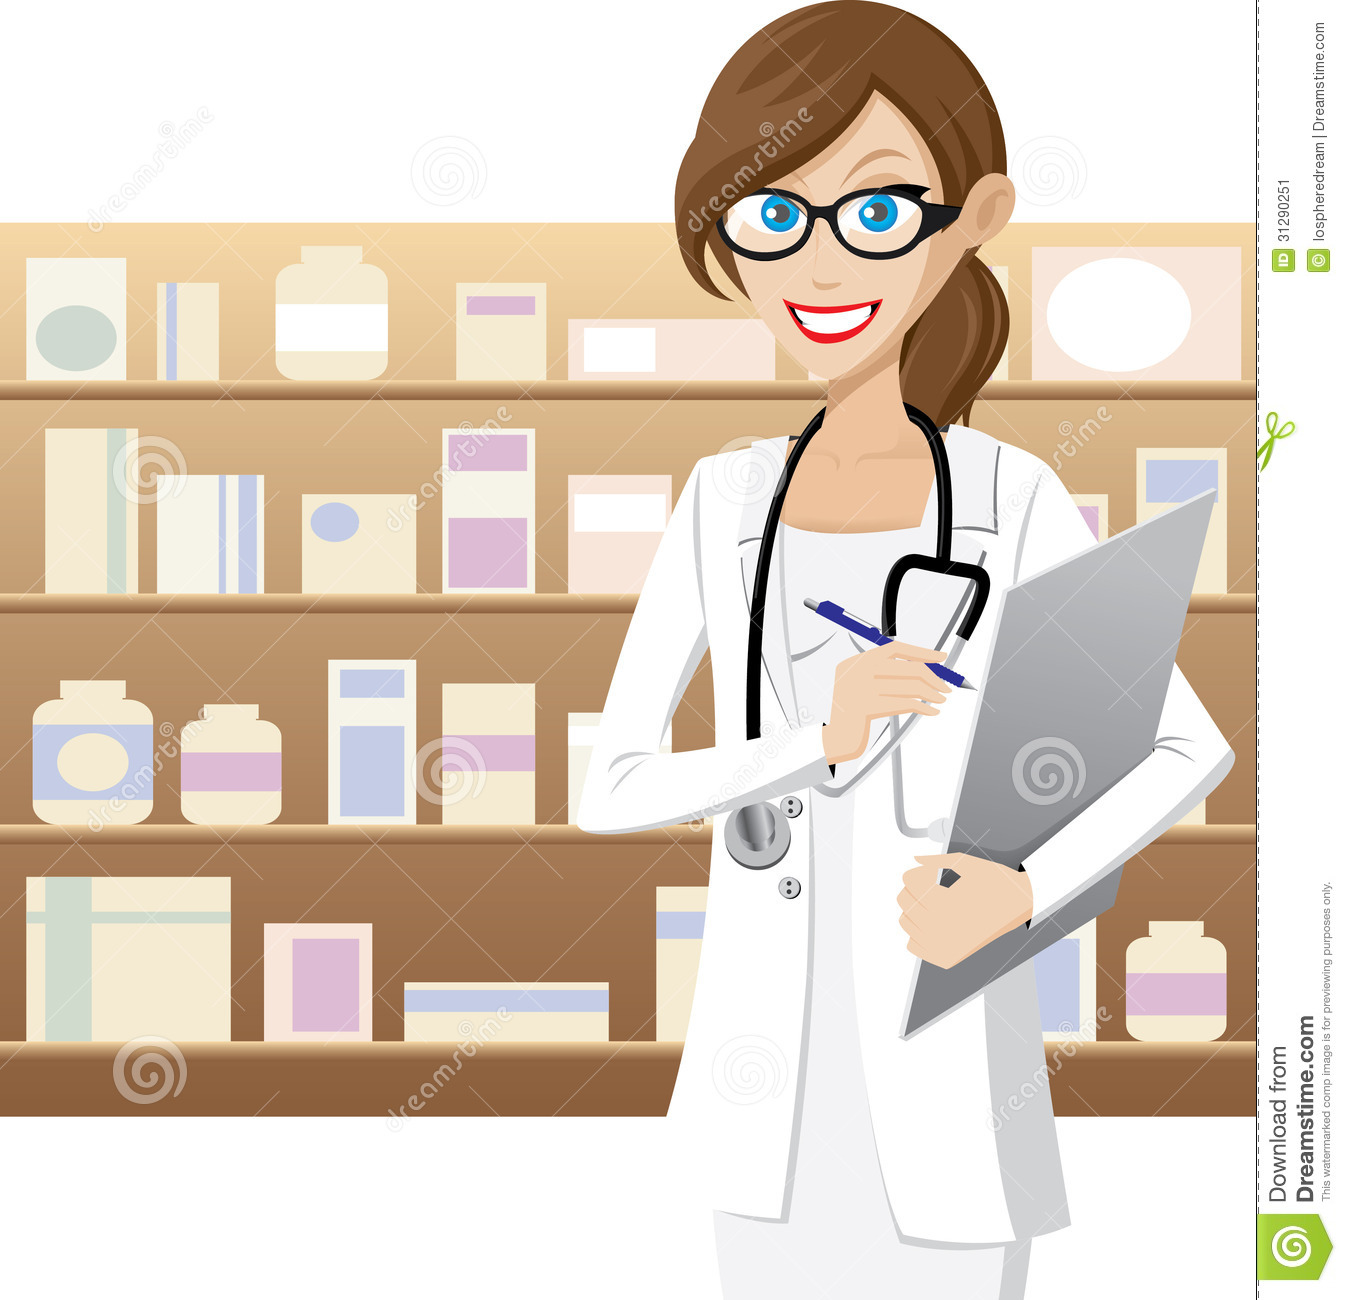 clip art of a pharmacy - photo #39